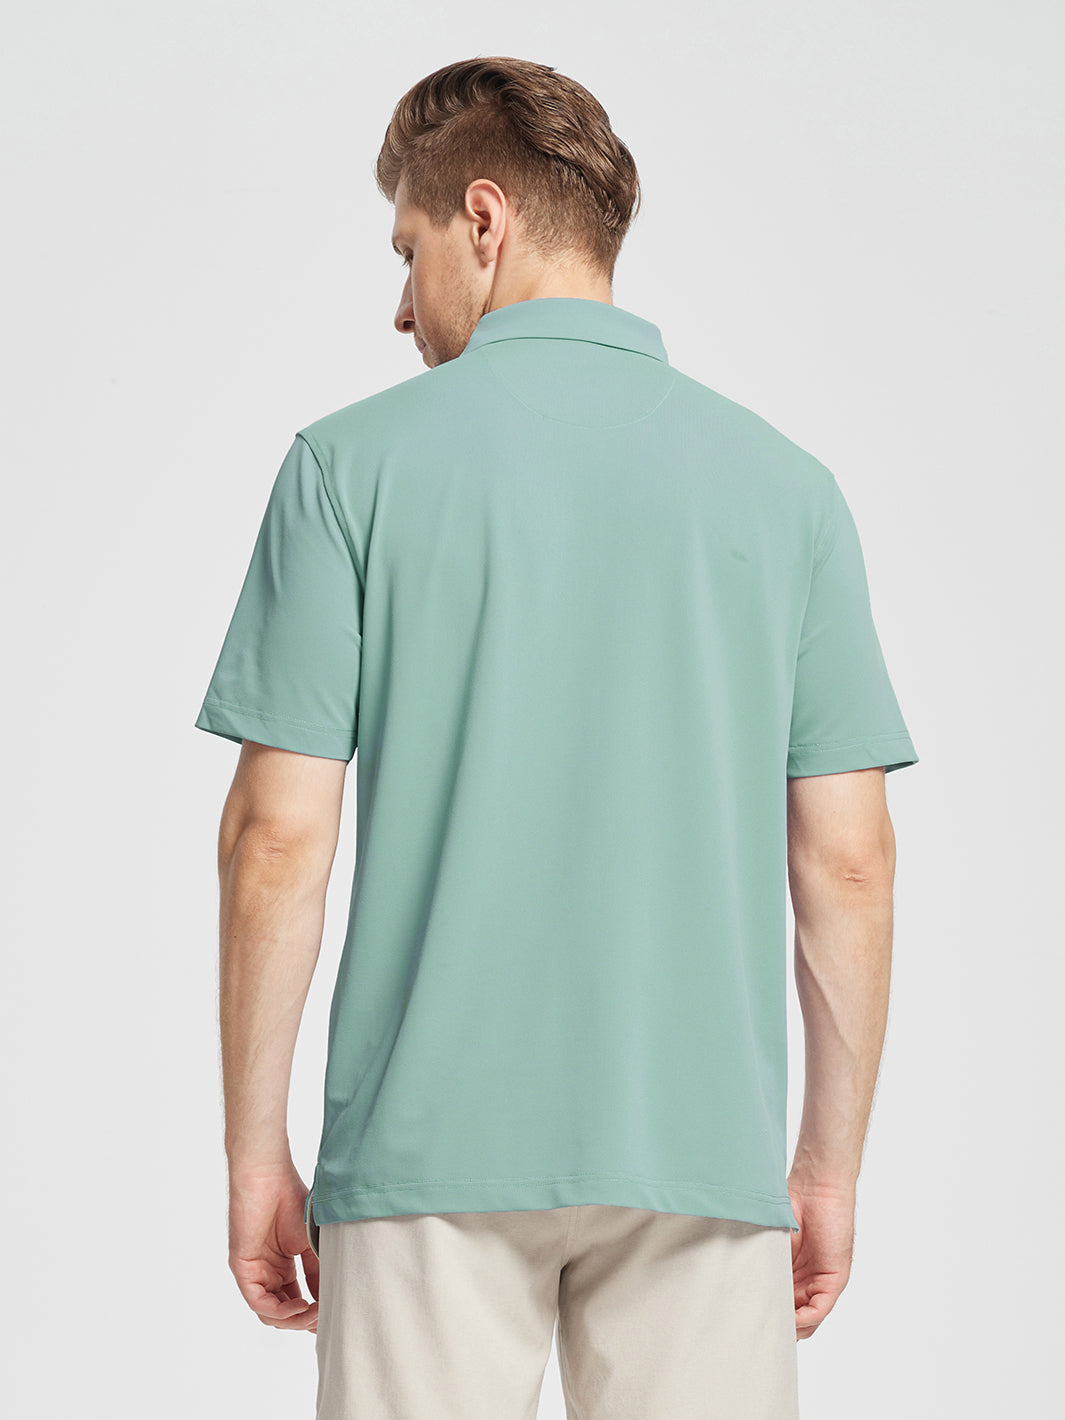 Men's Dry Fit Pique Golf Shirts-Beryl Green